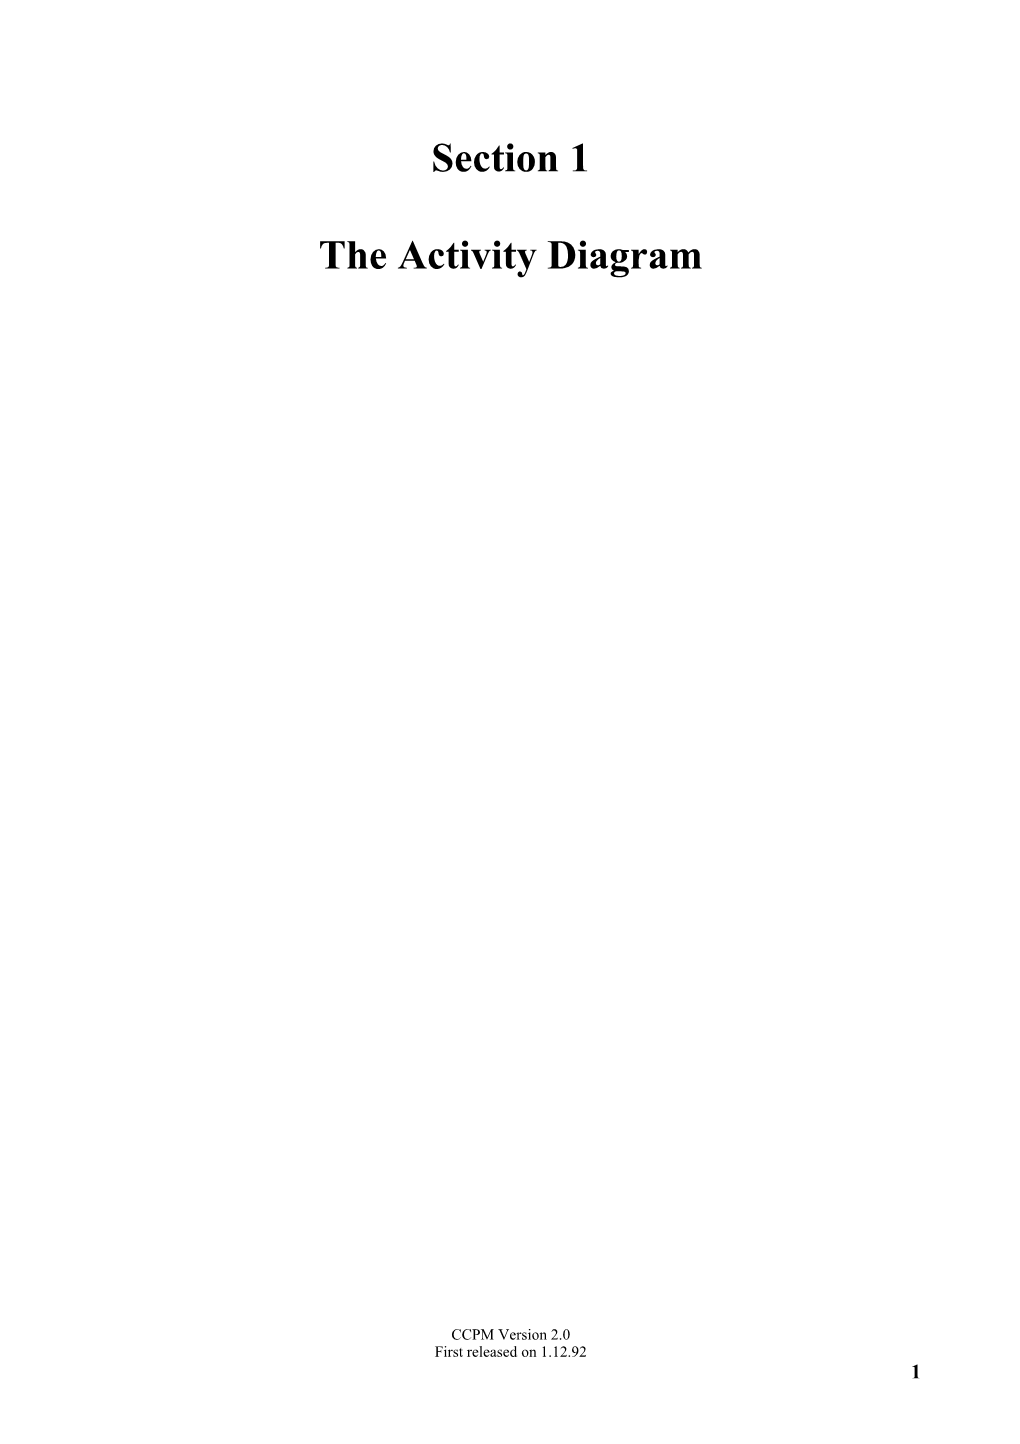 The Activity Diagram